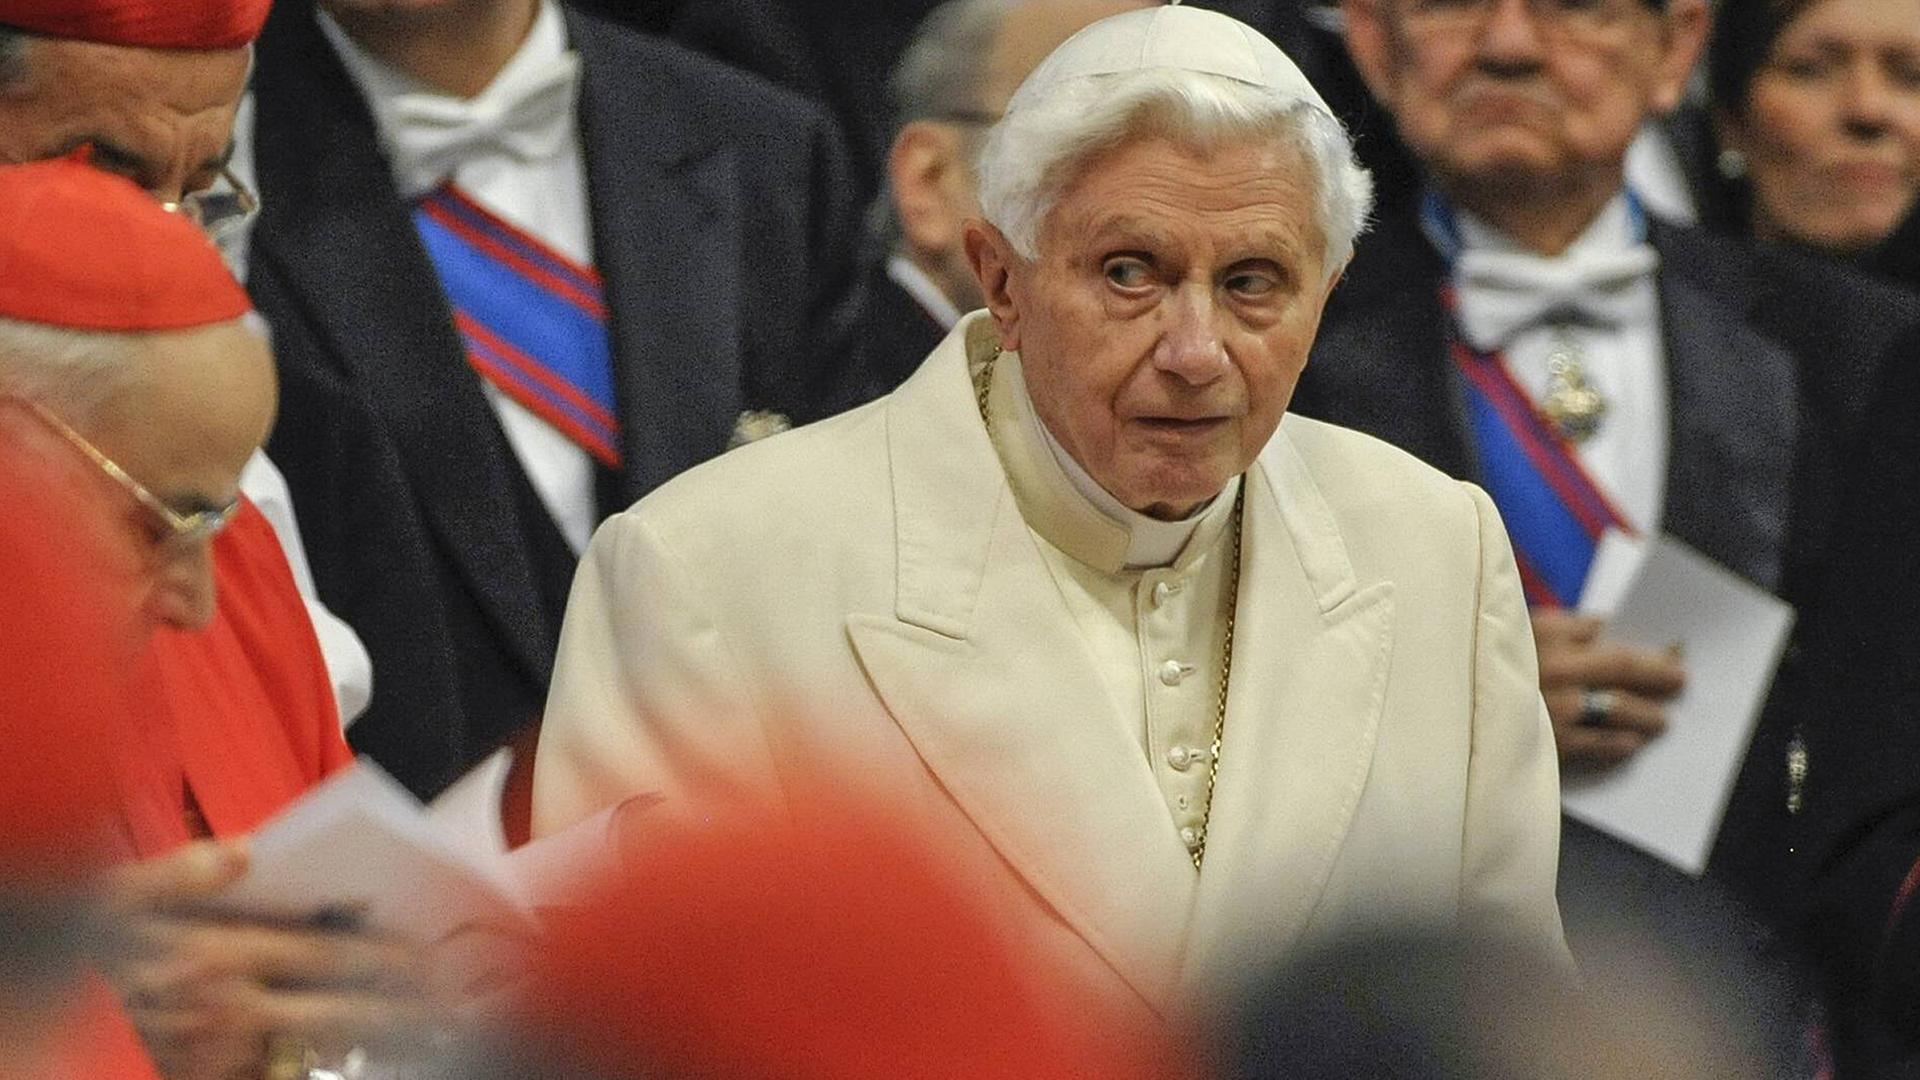 Joseph Ratzinger, der emeritierte Papst Benedikt XVI, am 22.02.2014 im Vatikan